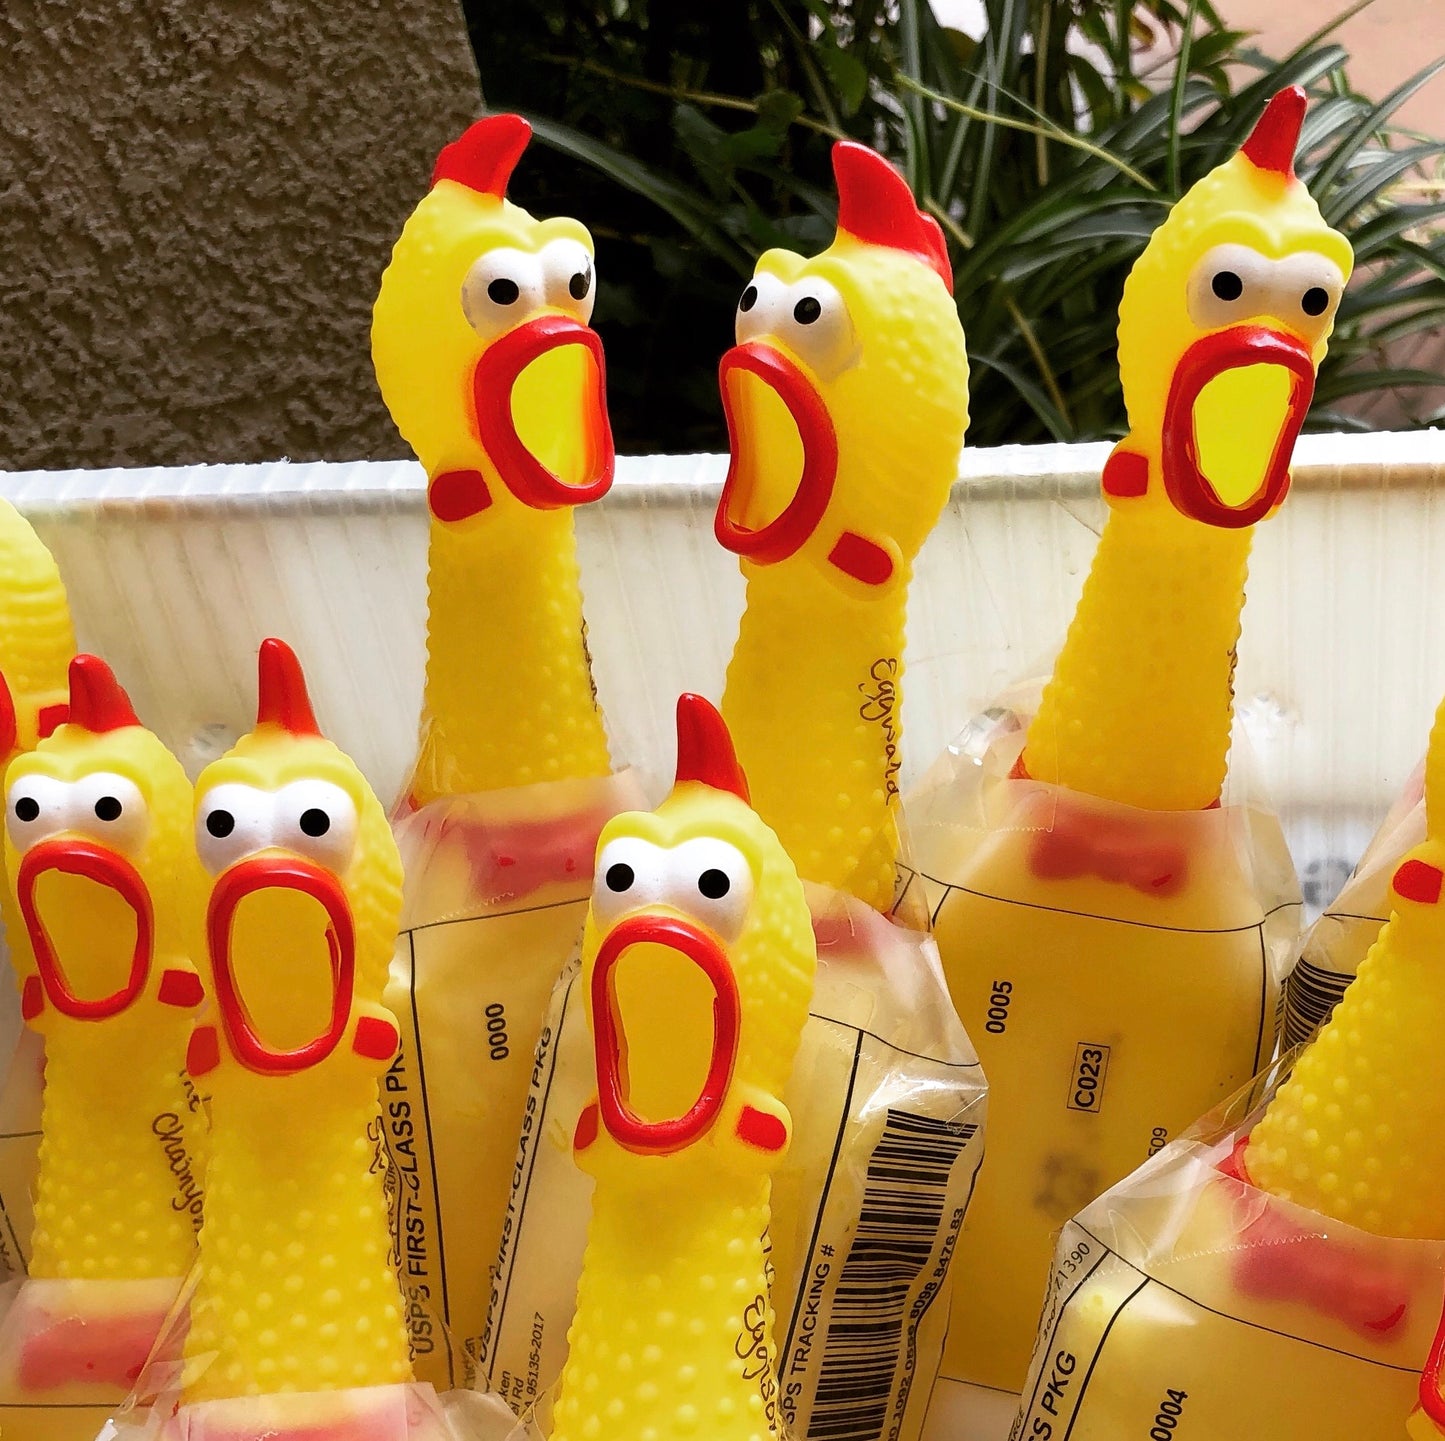 Flock a Friend: Send Half a Dozen (6) Rubber Chickens